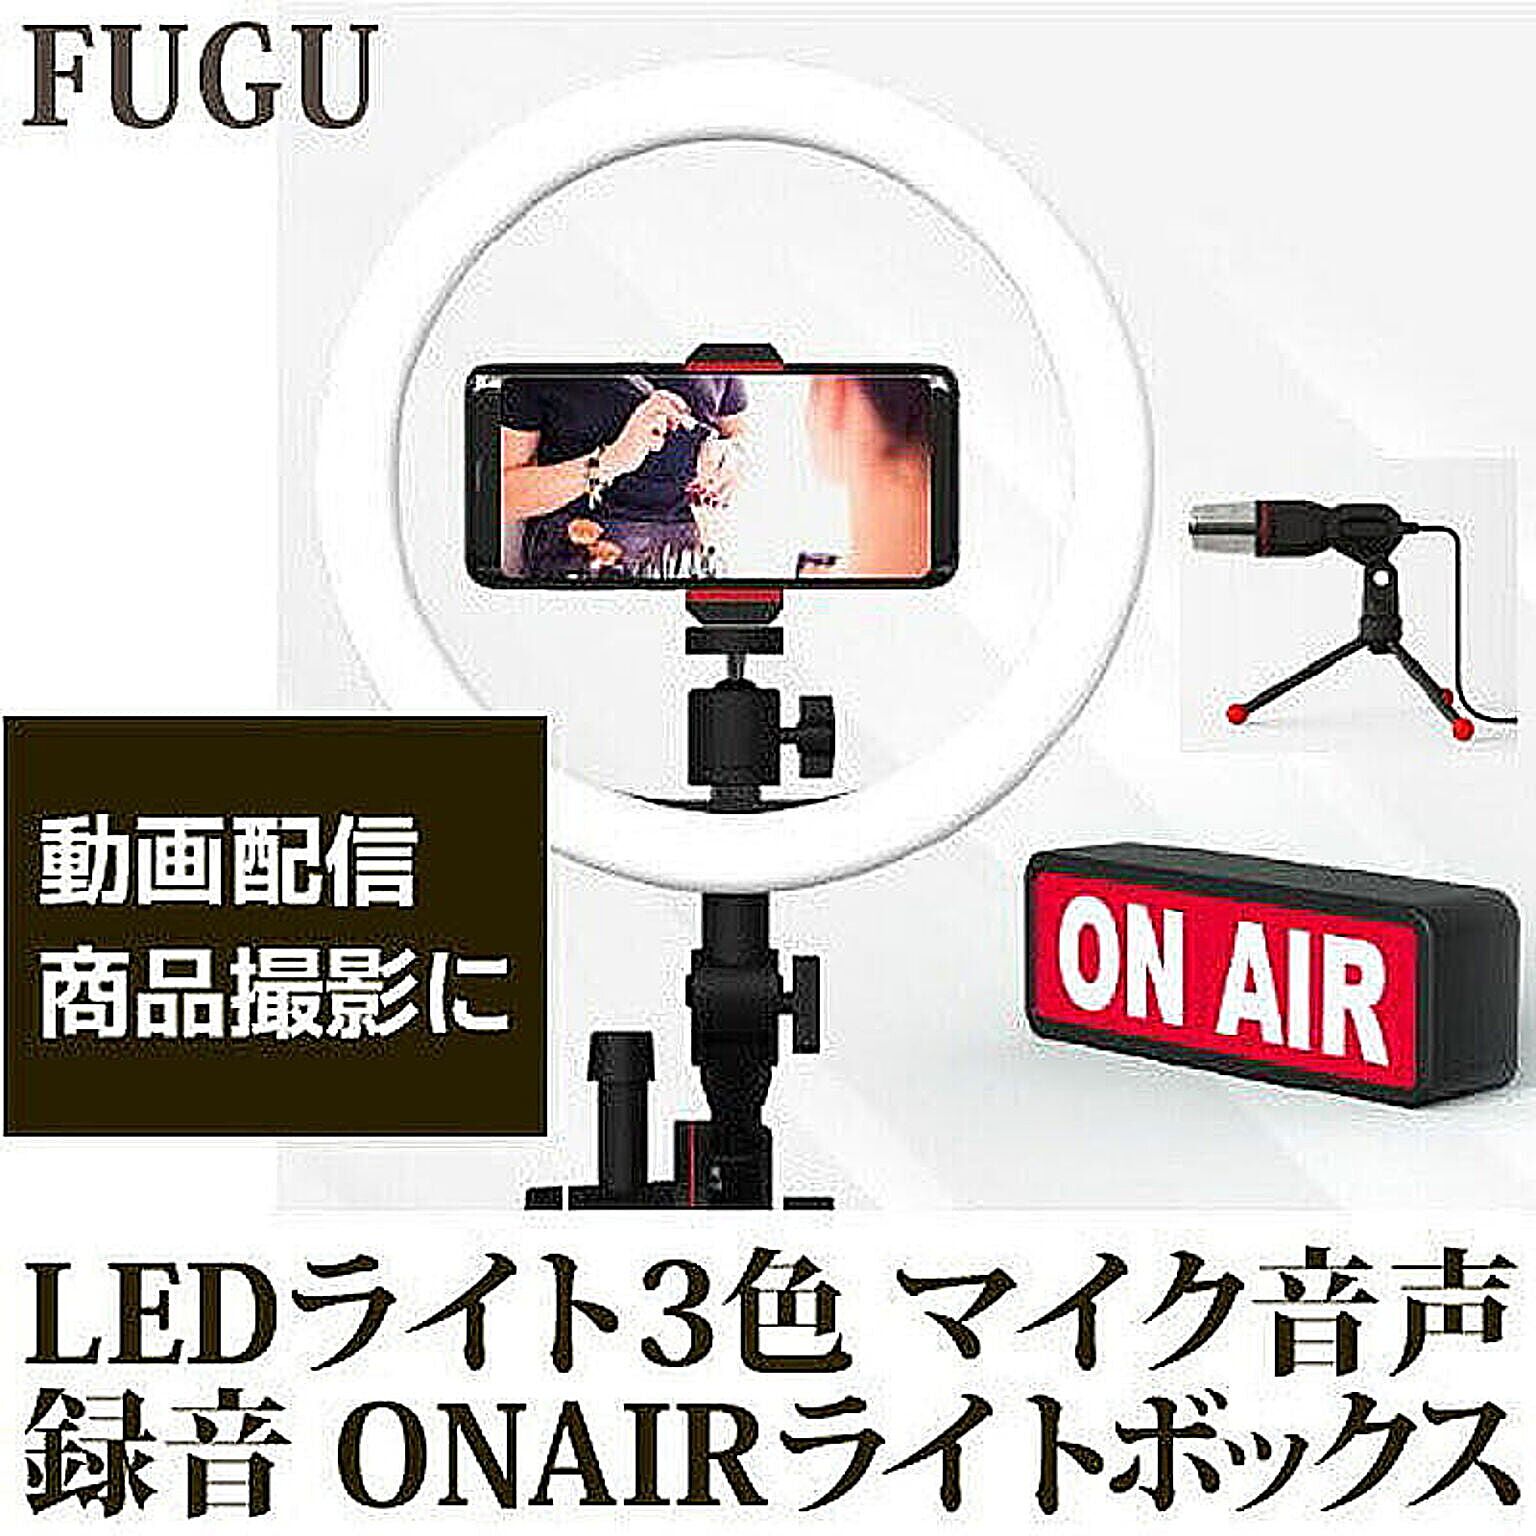 FUGU 動画配信キット LEDライト 3色モード ONAIRライトボックス 角度調整 FG-VIDKIT001 管理No. 4589490377787